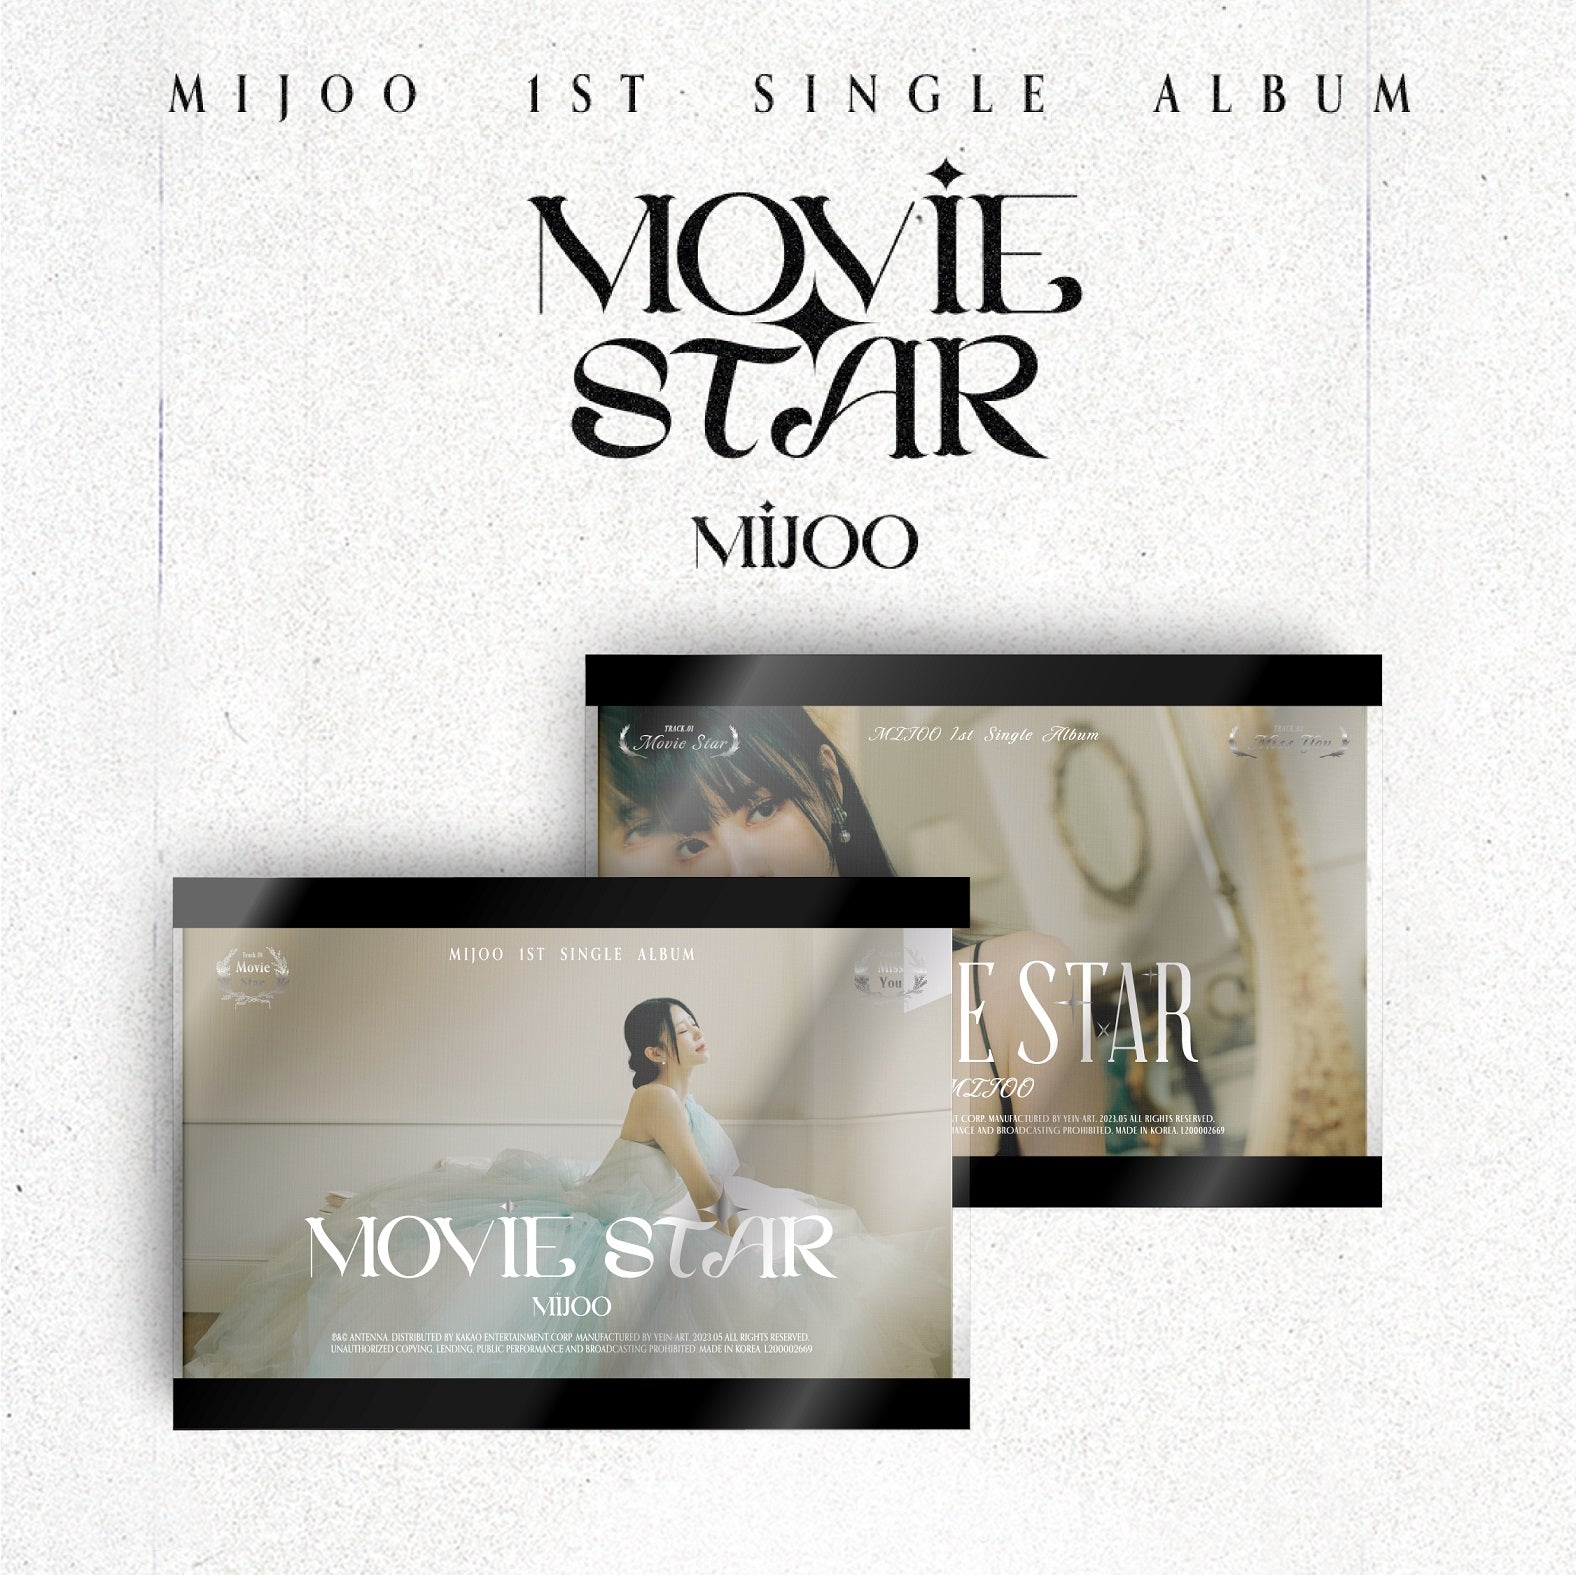 MIJOO 1ST SINGLE ALBUM 'MOVIE STAR' SET COVER